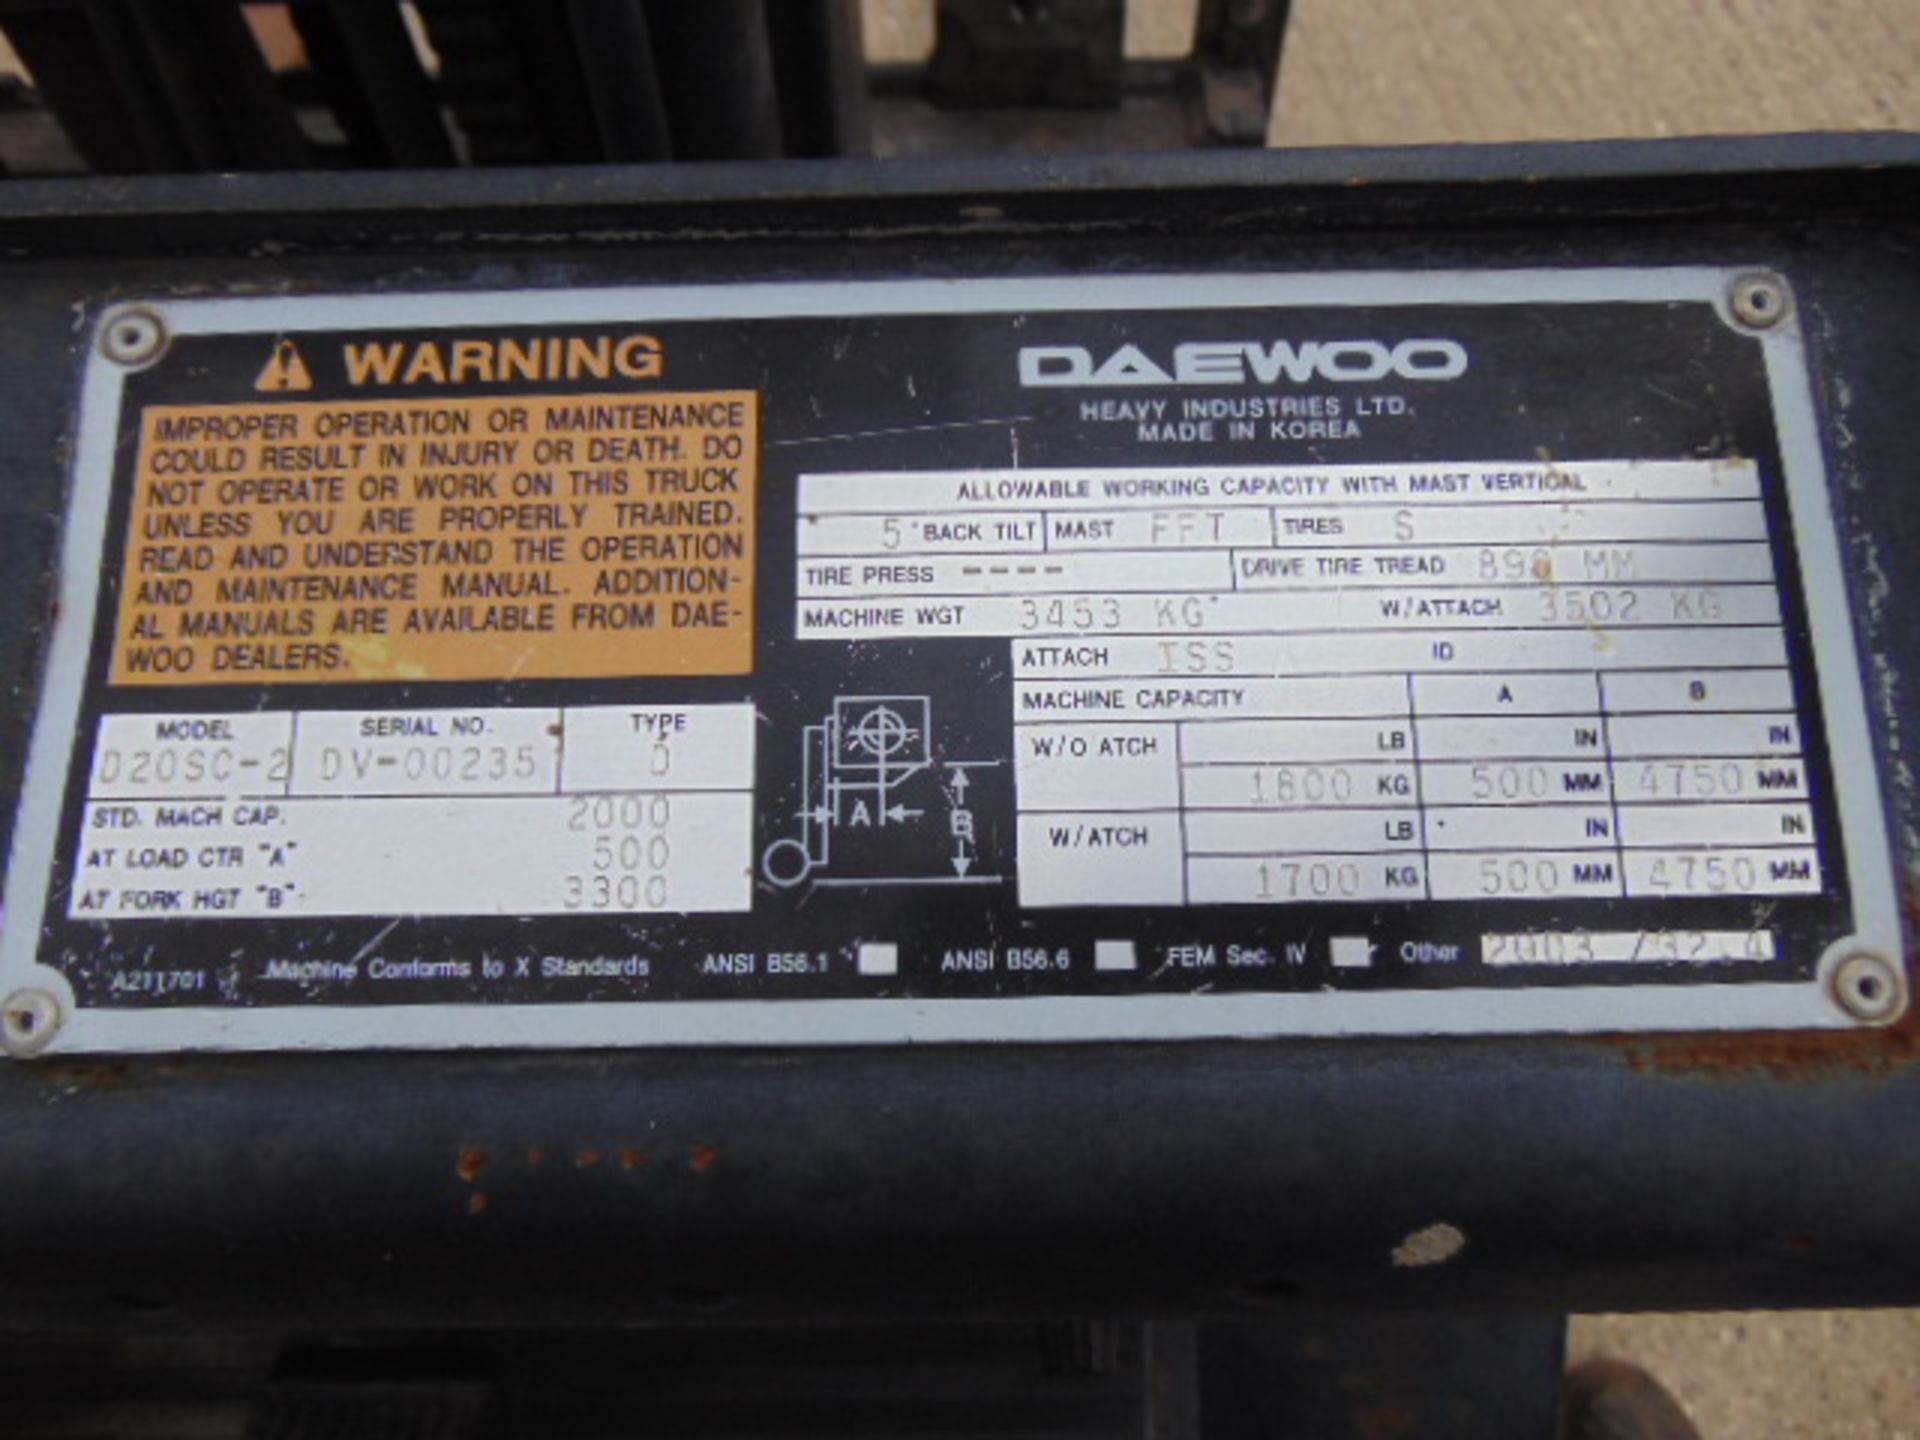 Daewoo D20SC-2 Counter Balance Diesel Forklift - Image 16 of 18